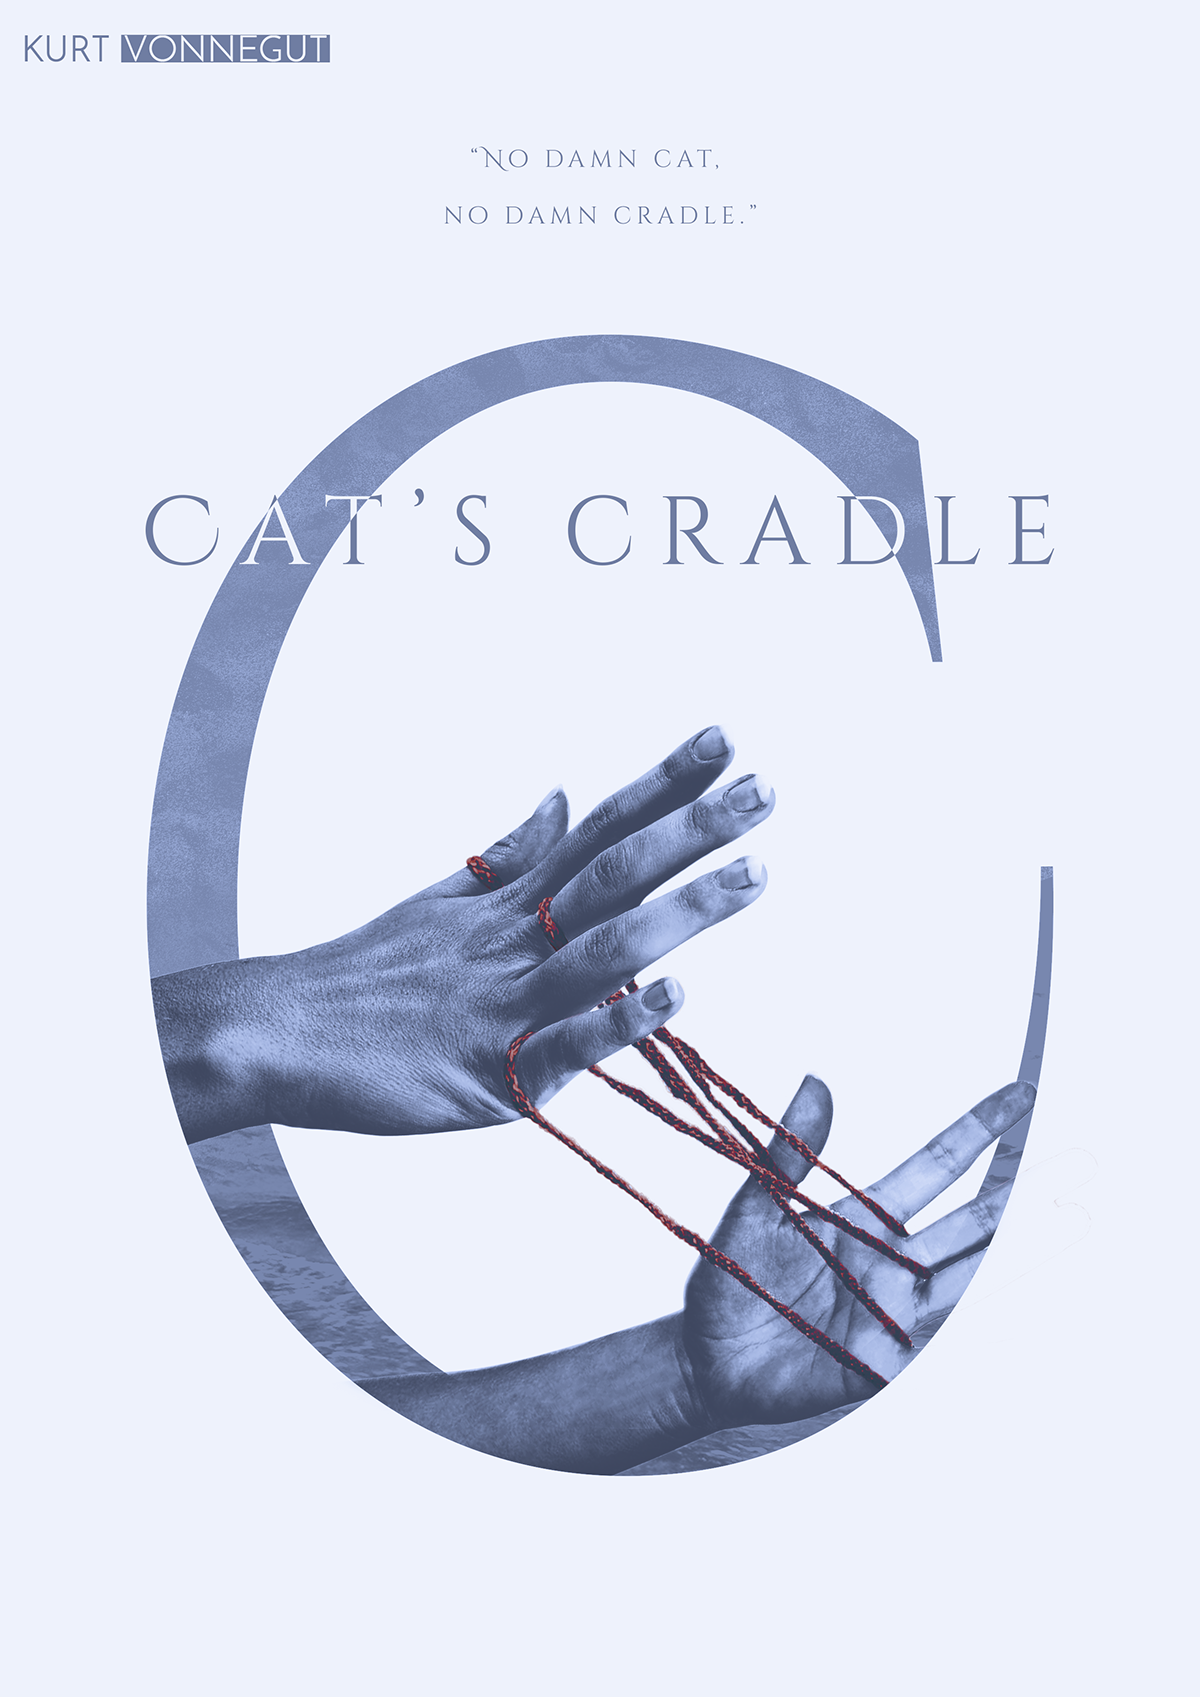 Cat's Cradle, Kurt Vonnegut poster/book cover on Behance